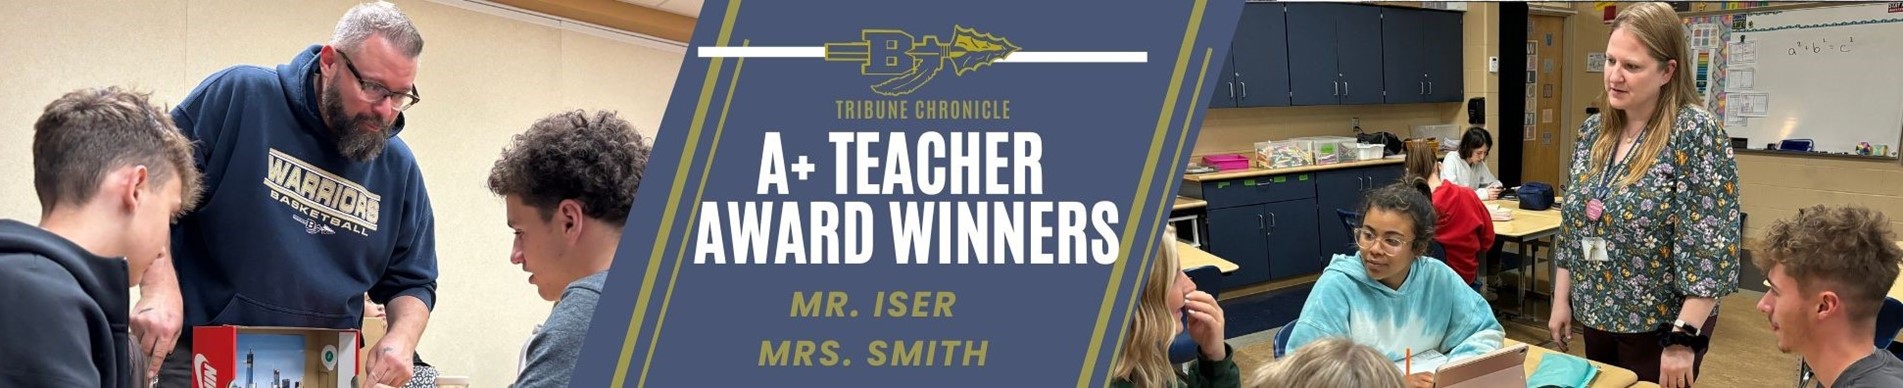 BHS teachers win A+ teacher awards!